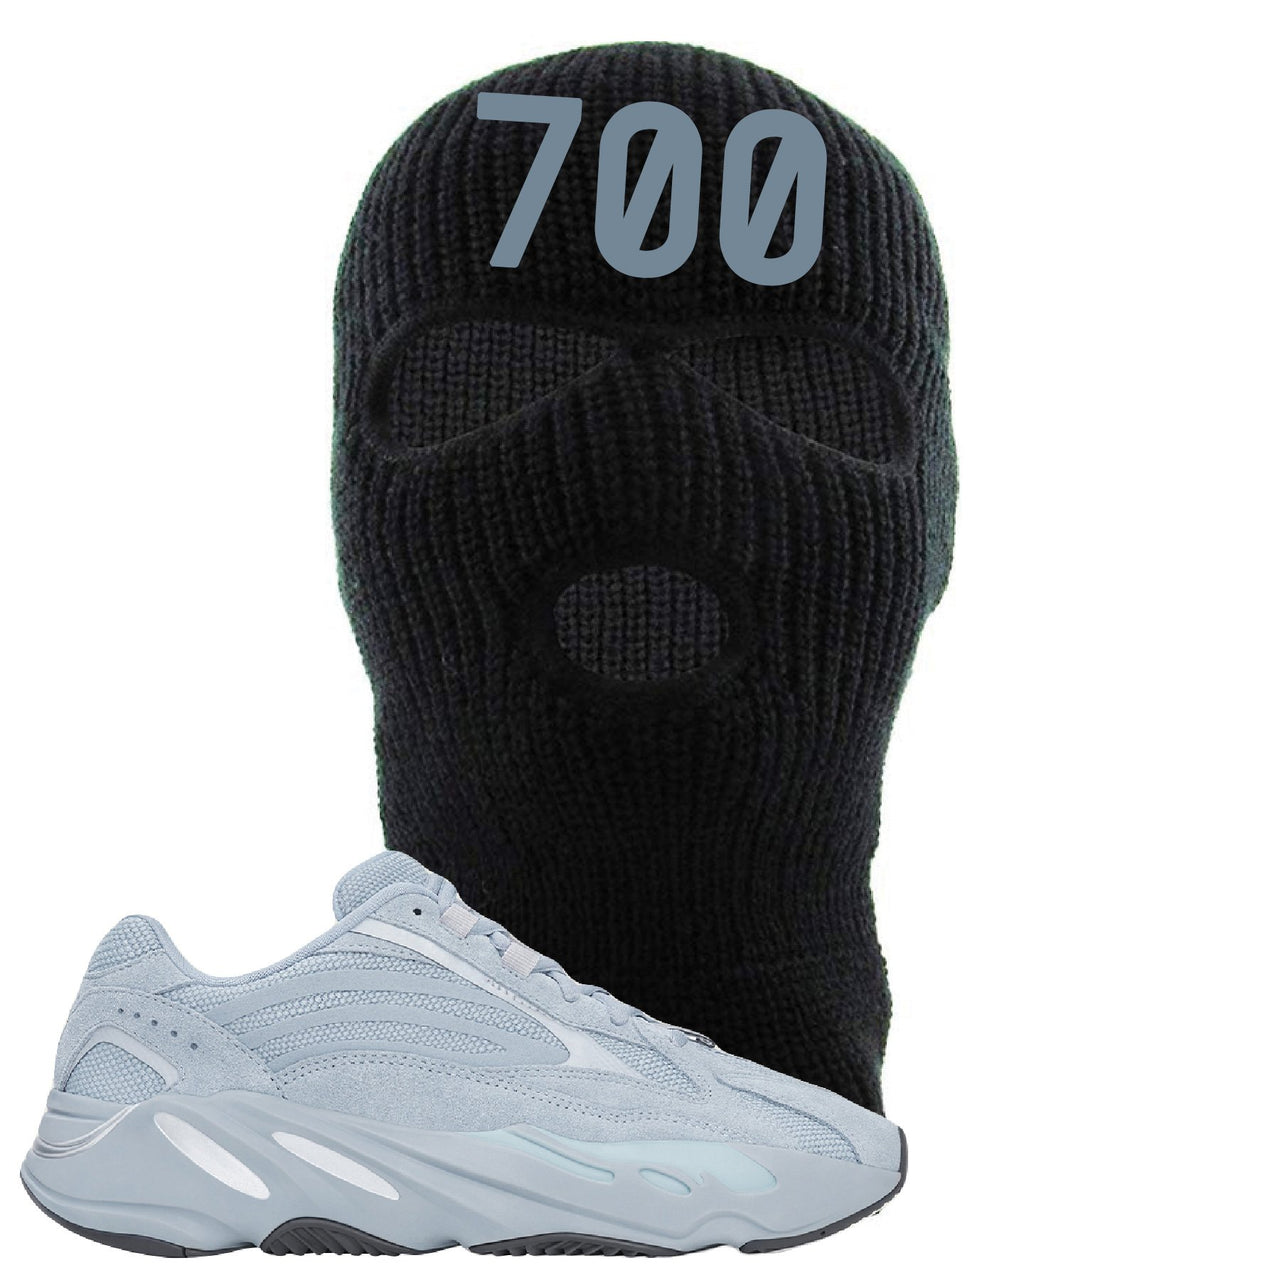 Yeezy Boost 700 V2 Hospital Blue 700 Sneaker Matching Black Ski Mask